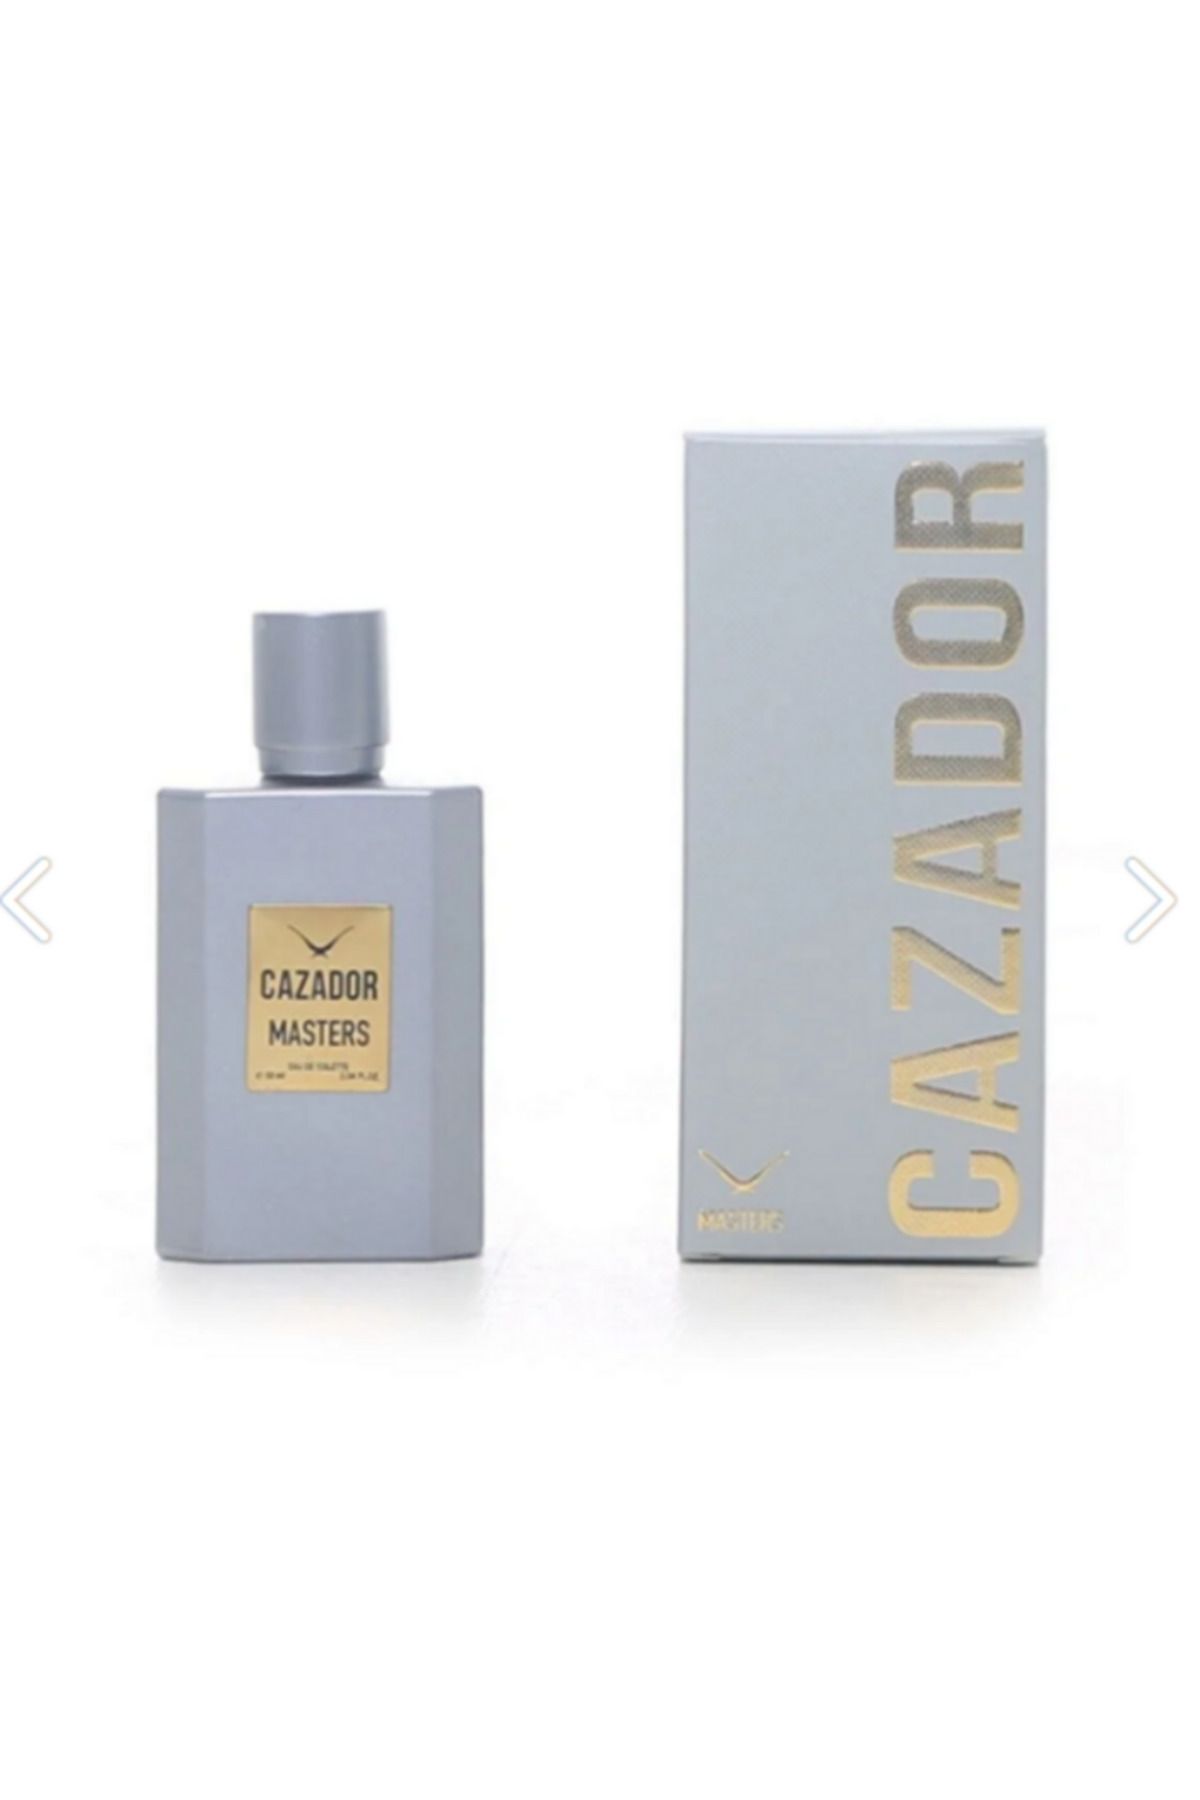 Cazador Caz 9560 Masters Parfum